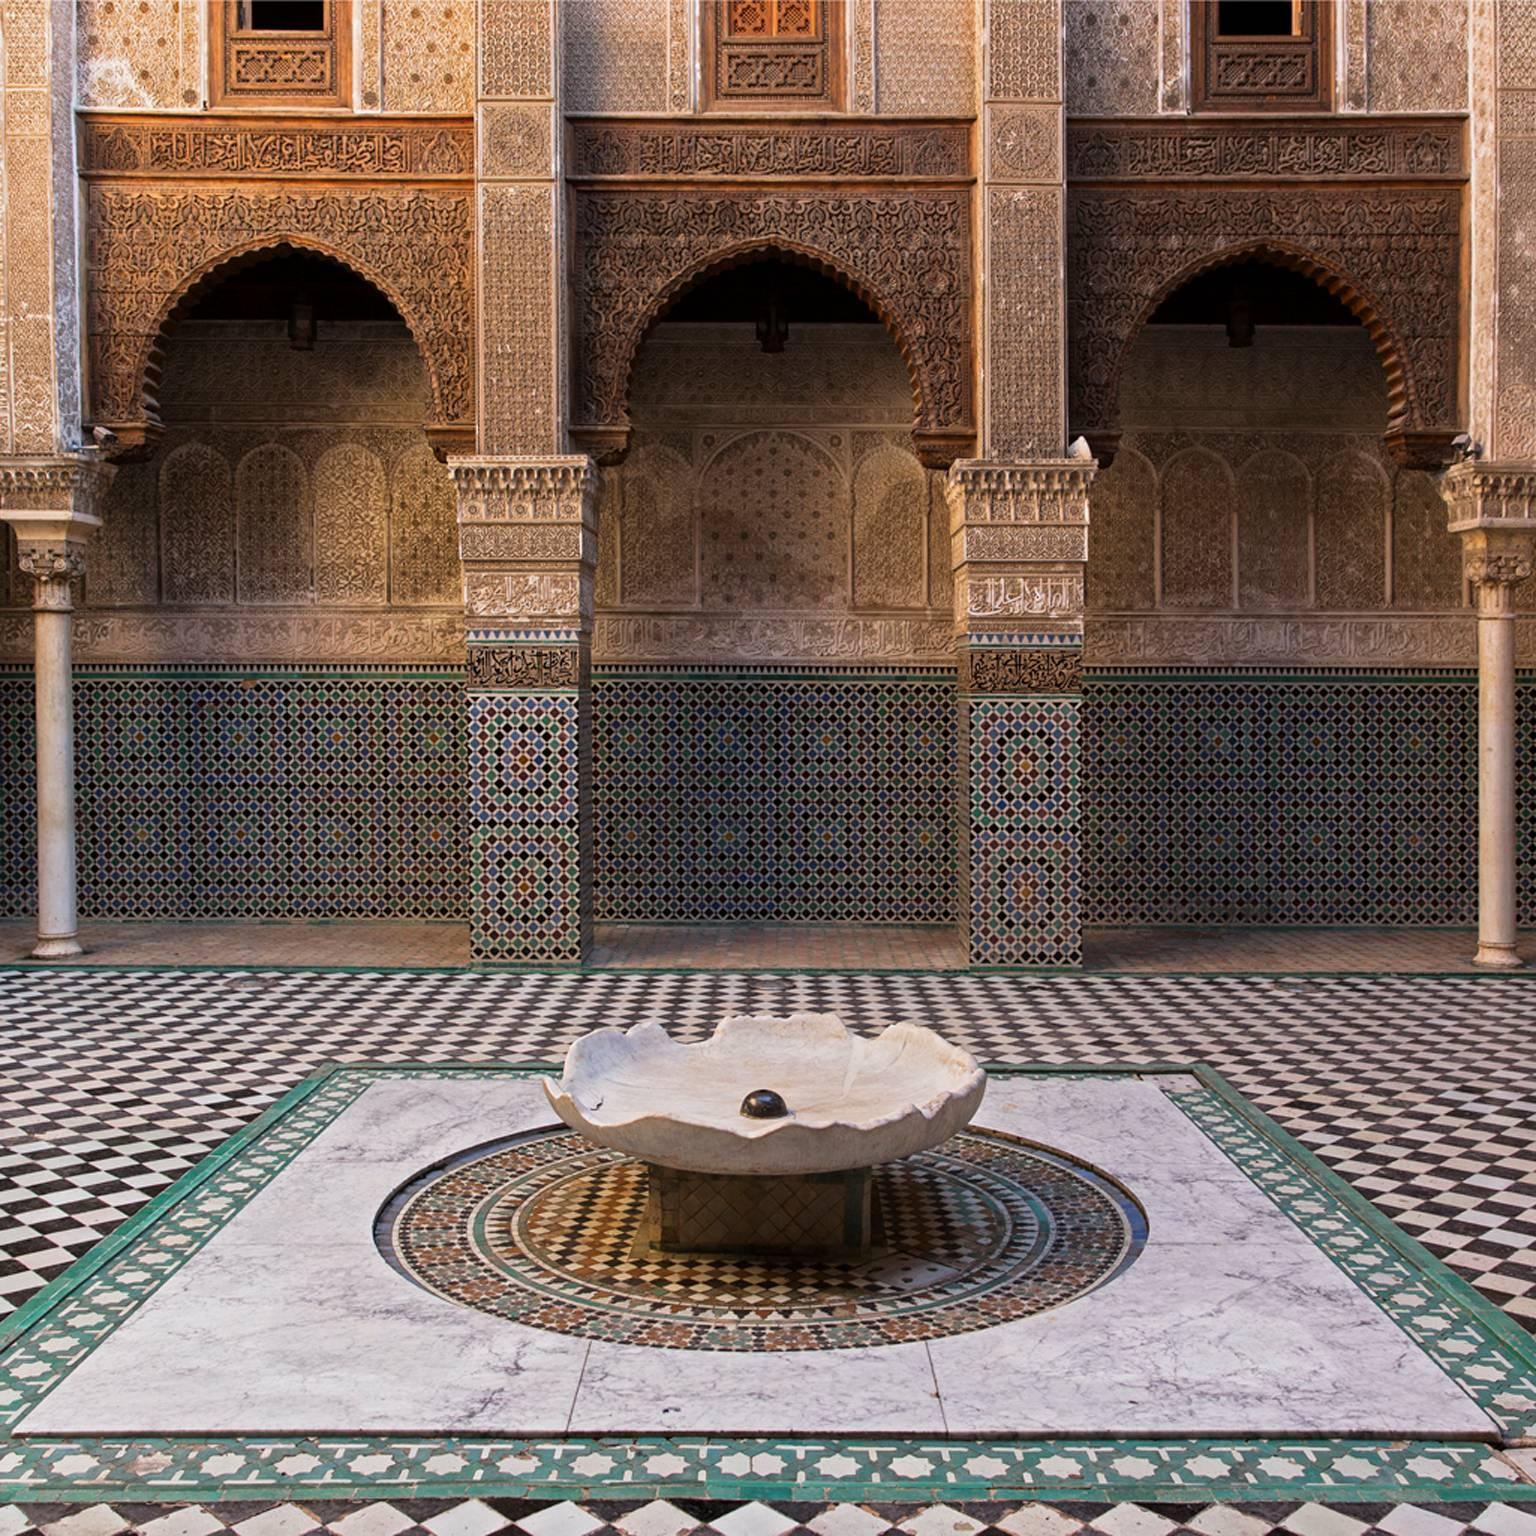 Bou Inania Medersa, Ver. 2, Fez, Morocco - Photograph by Massimo Di Lorenzo